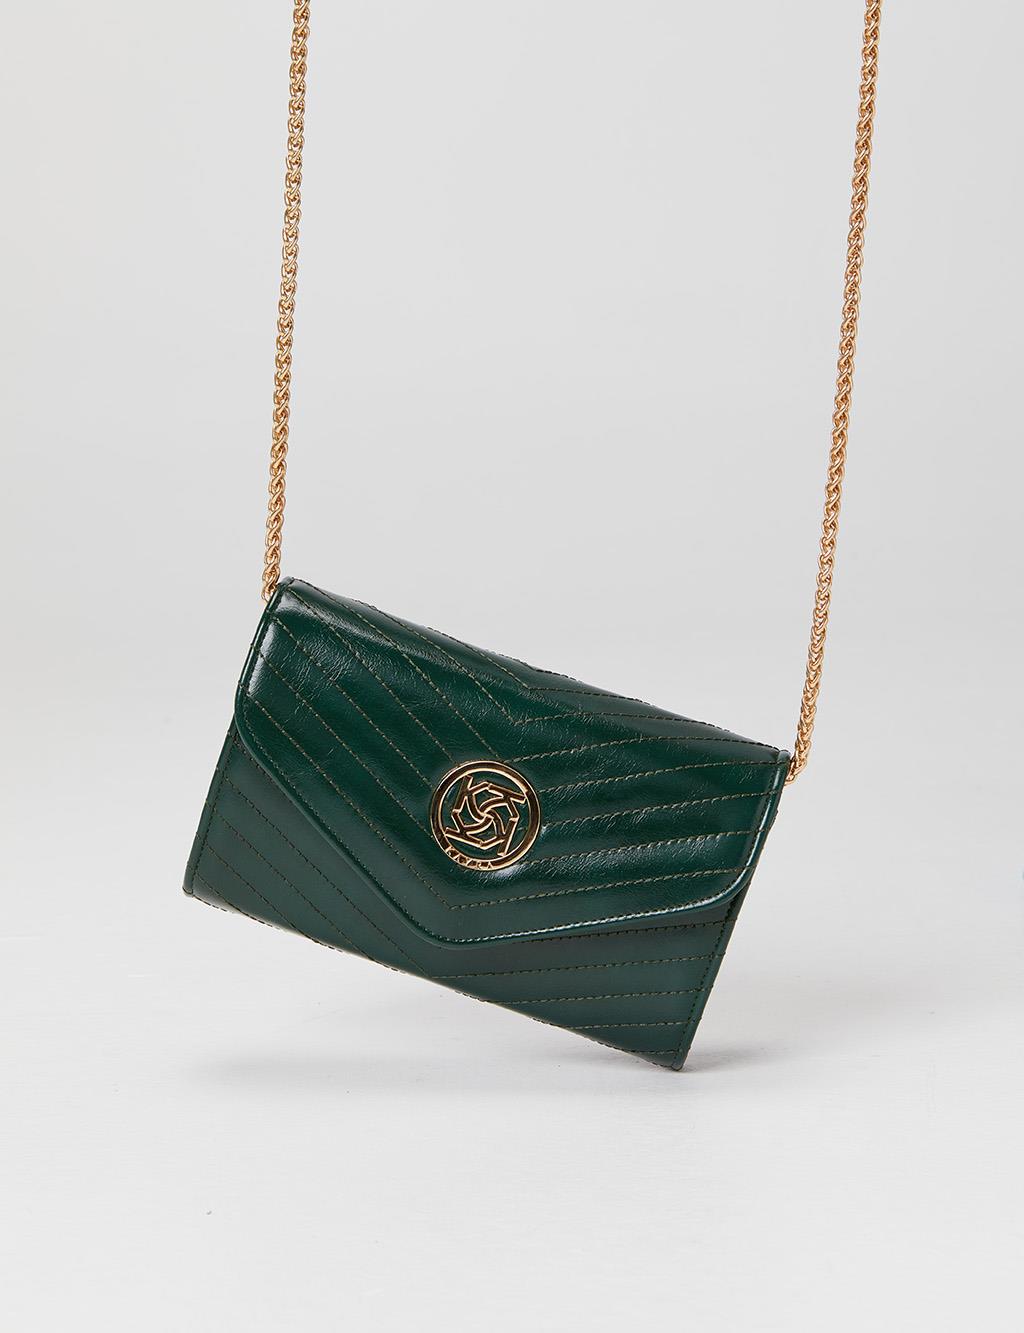 Gold Emblem Quilted Bag Emerald